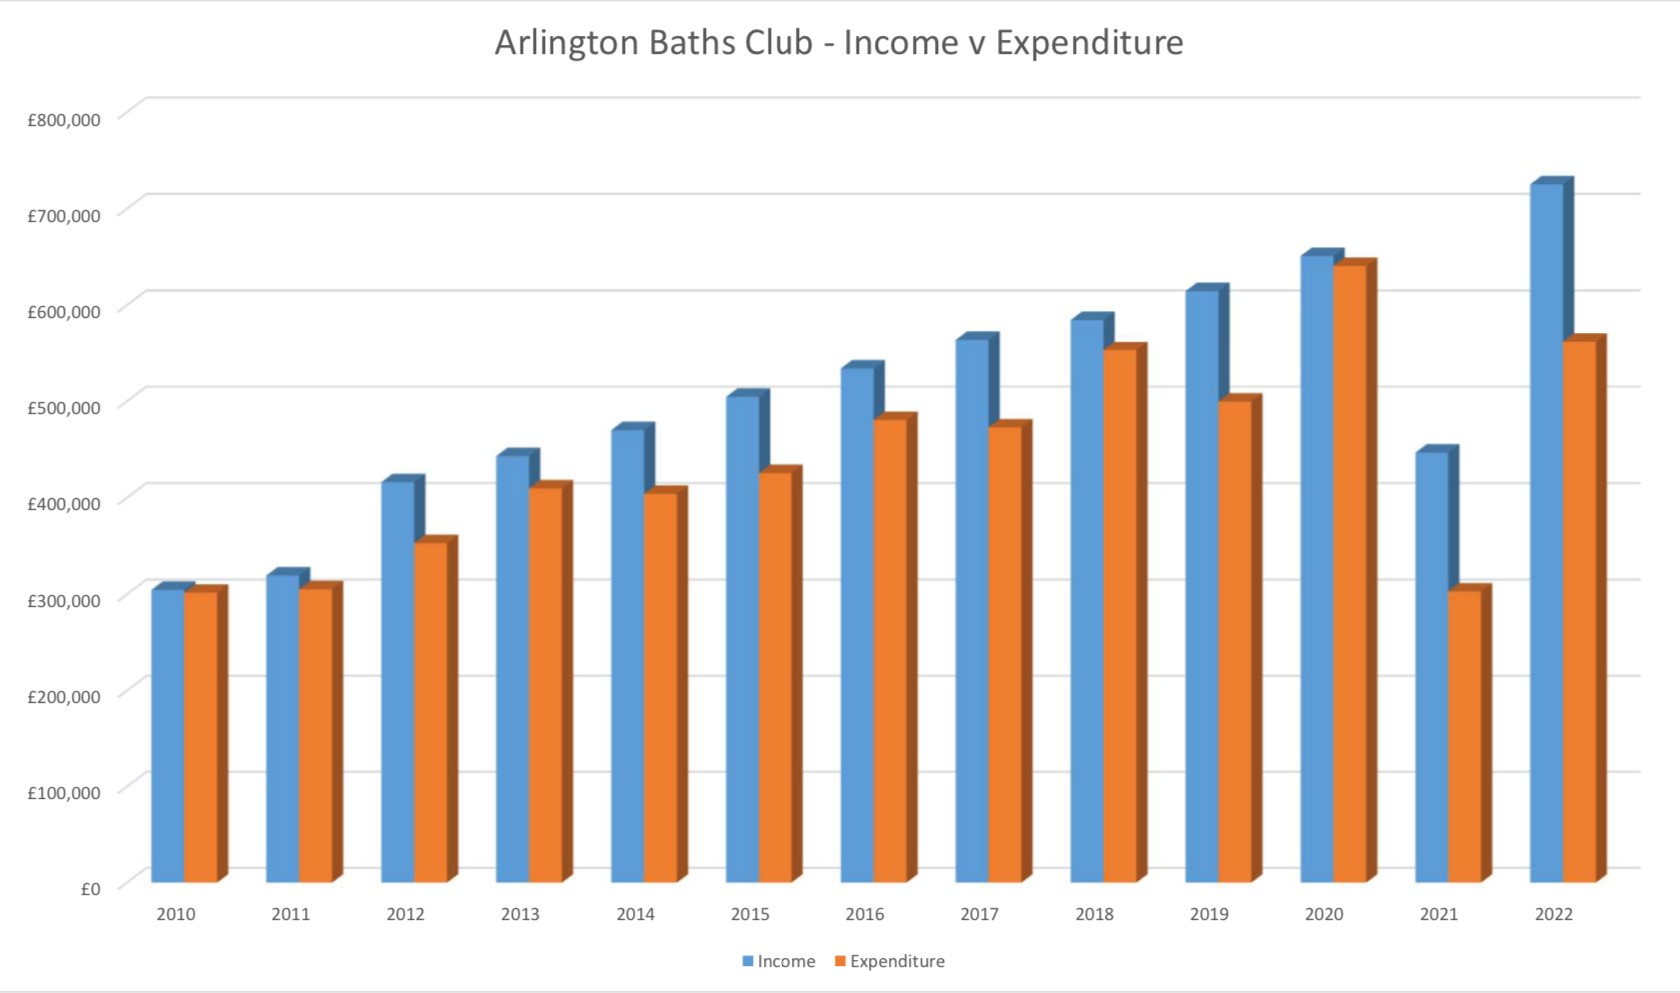 graph of income v expenditure of arlington baths club since 2000